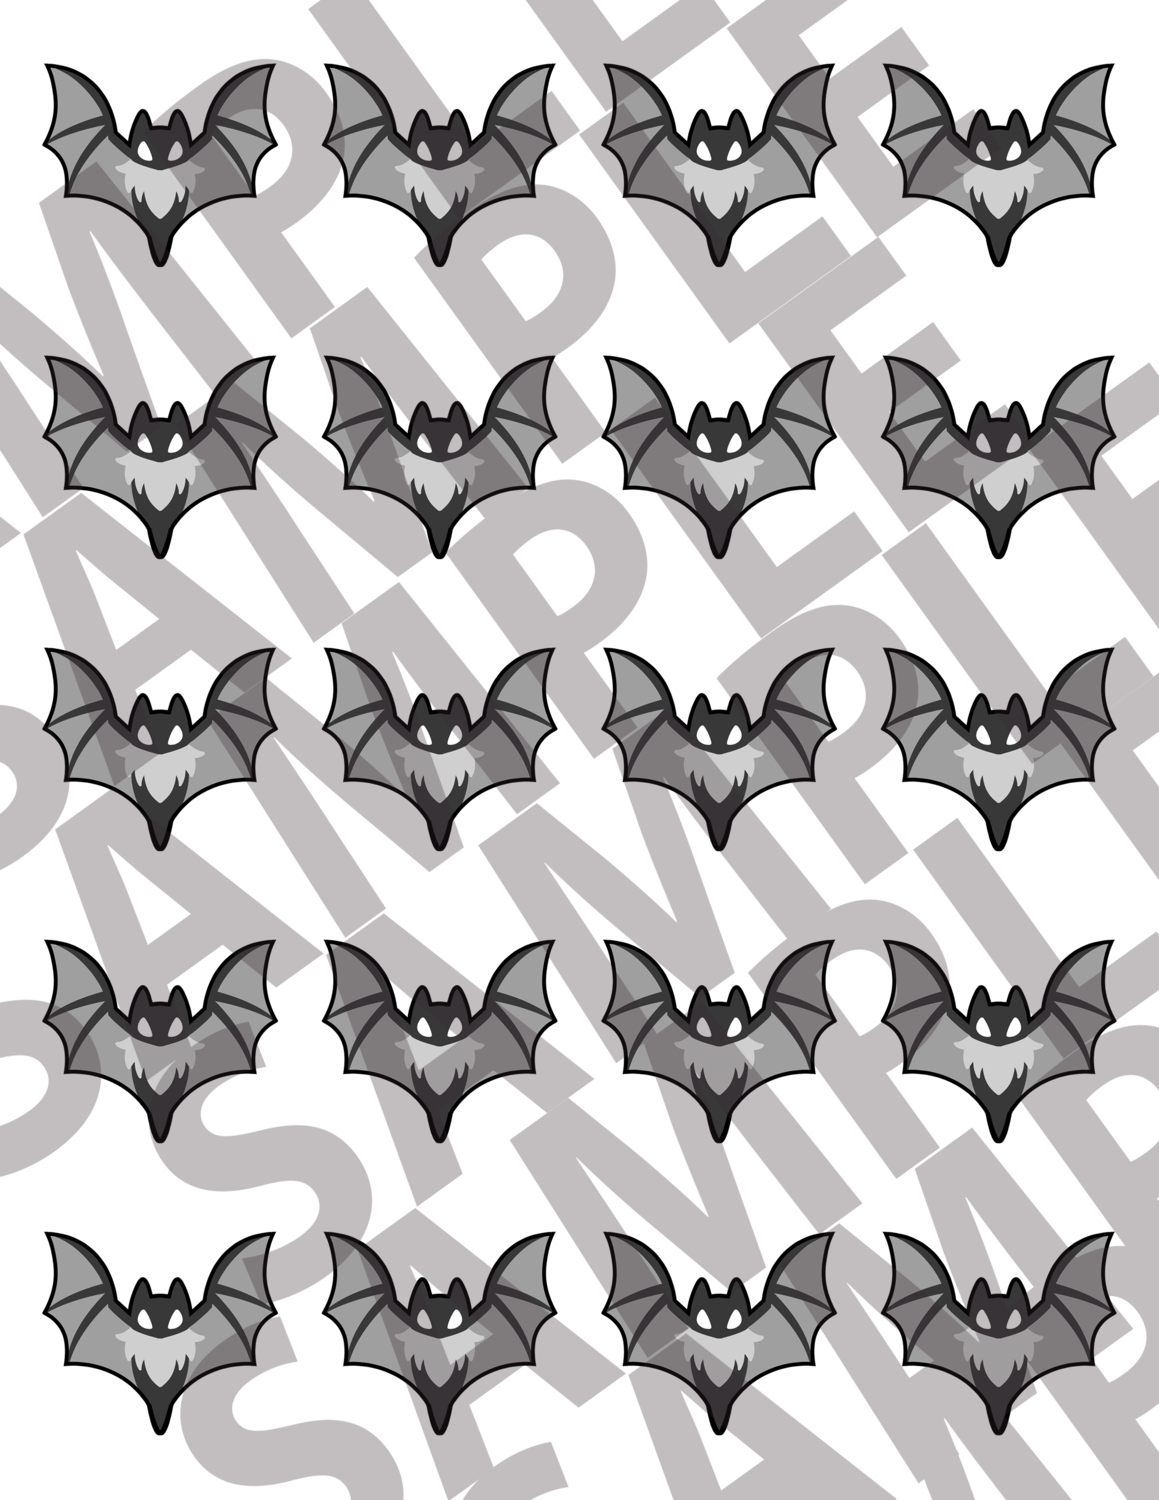 2 Inch Bats